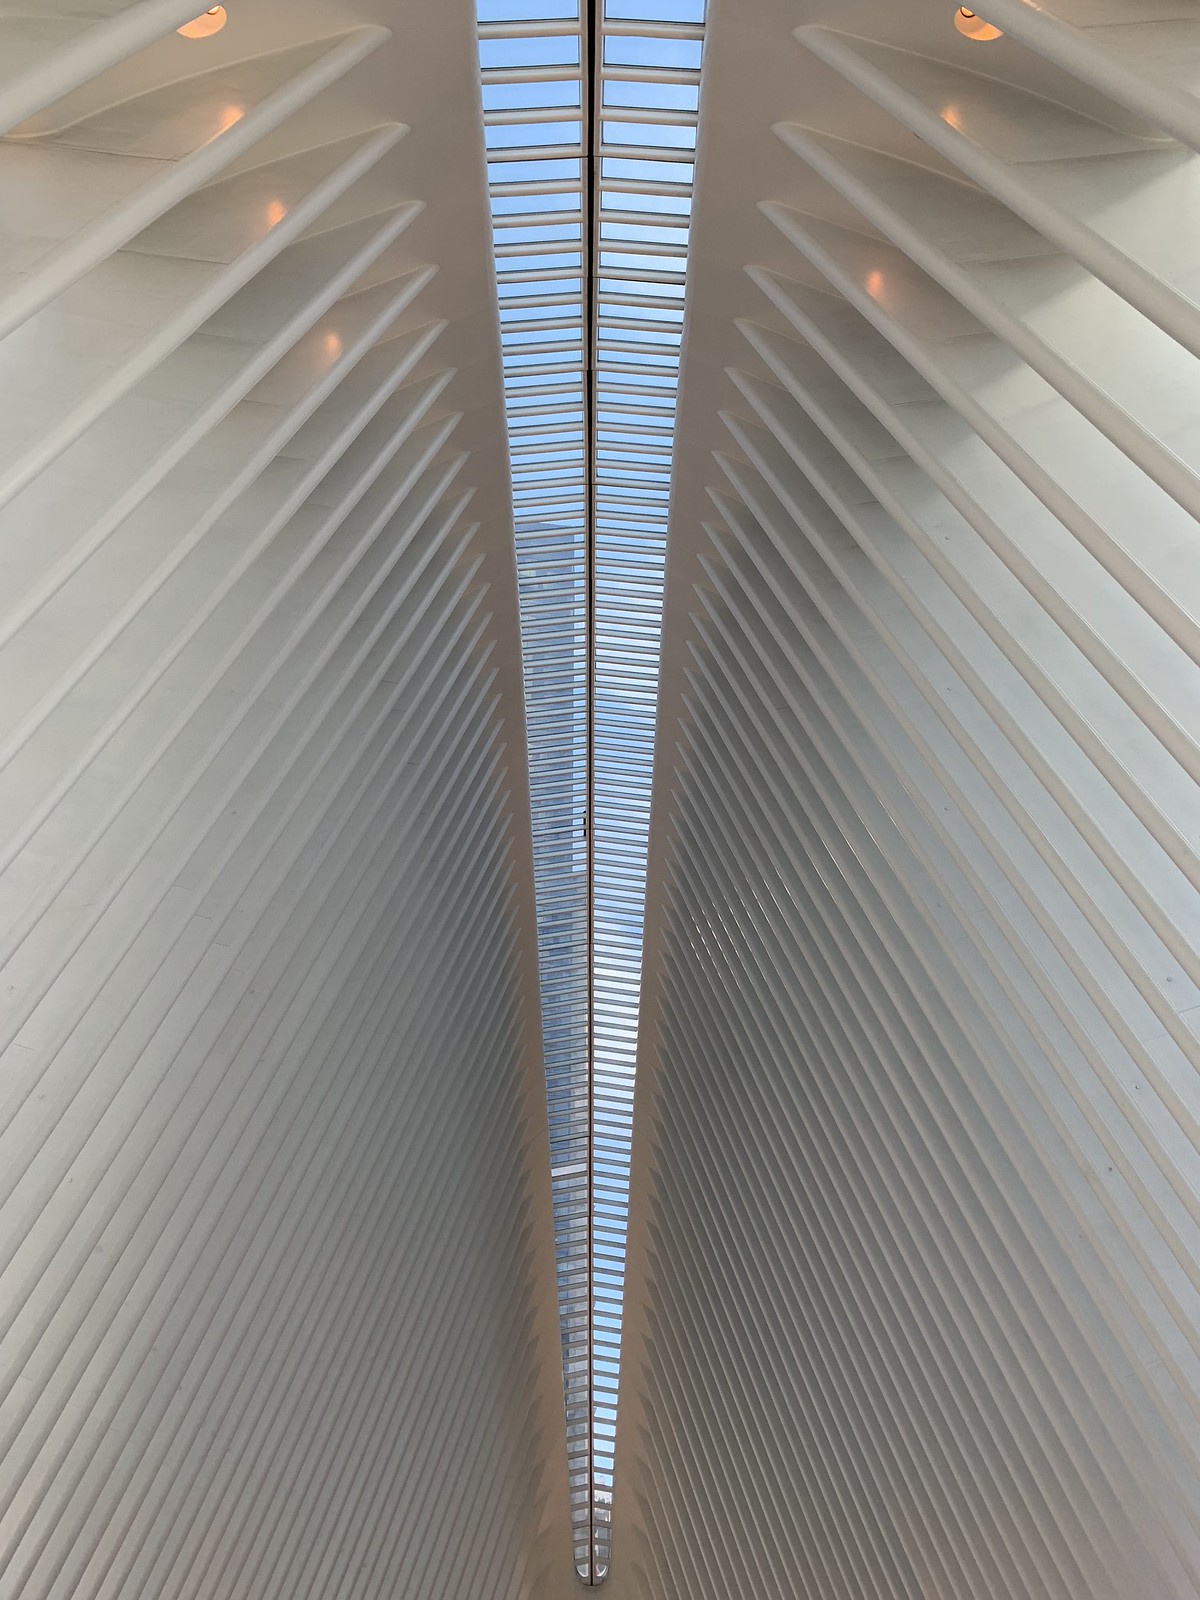 New-York Shot on iPhone XS Max